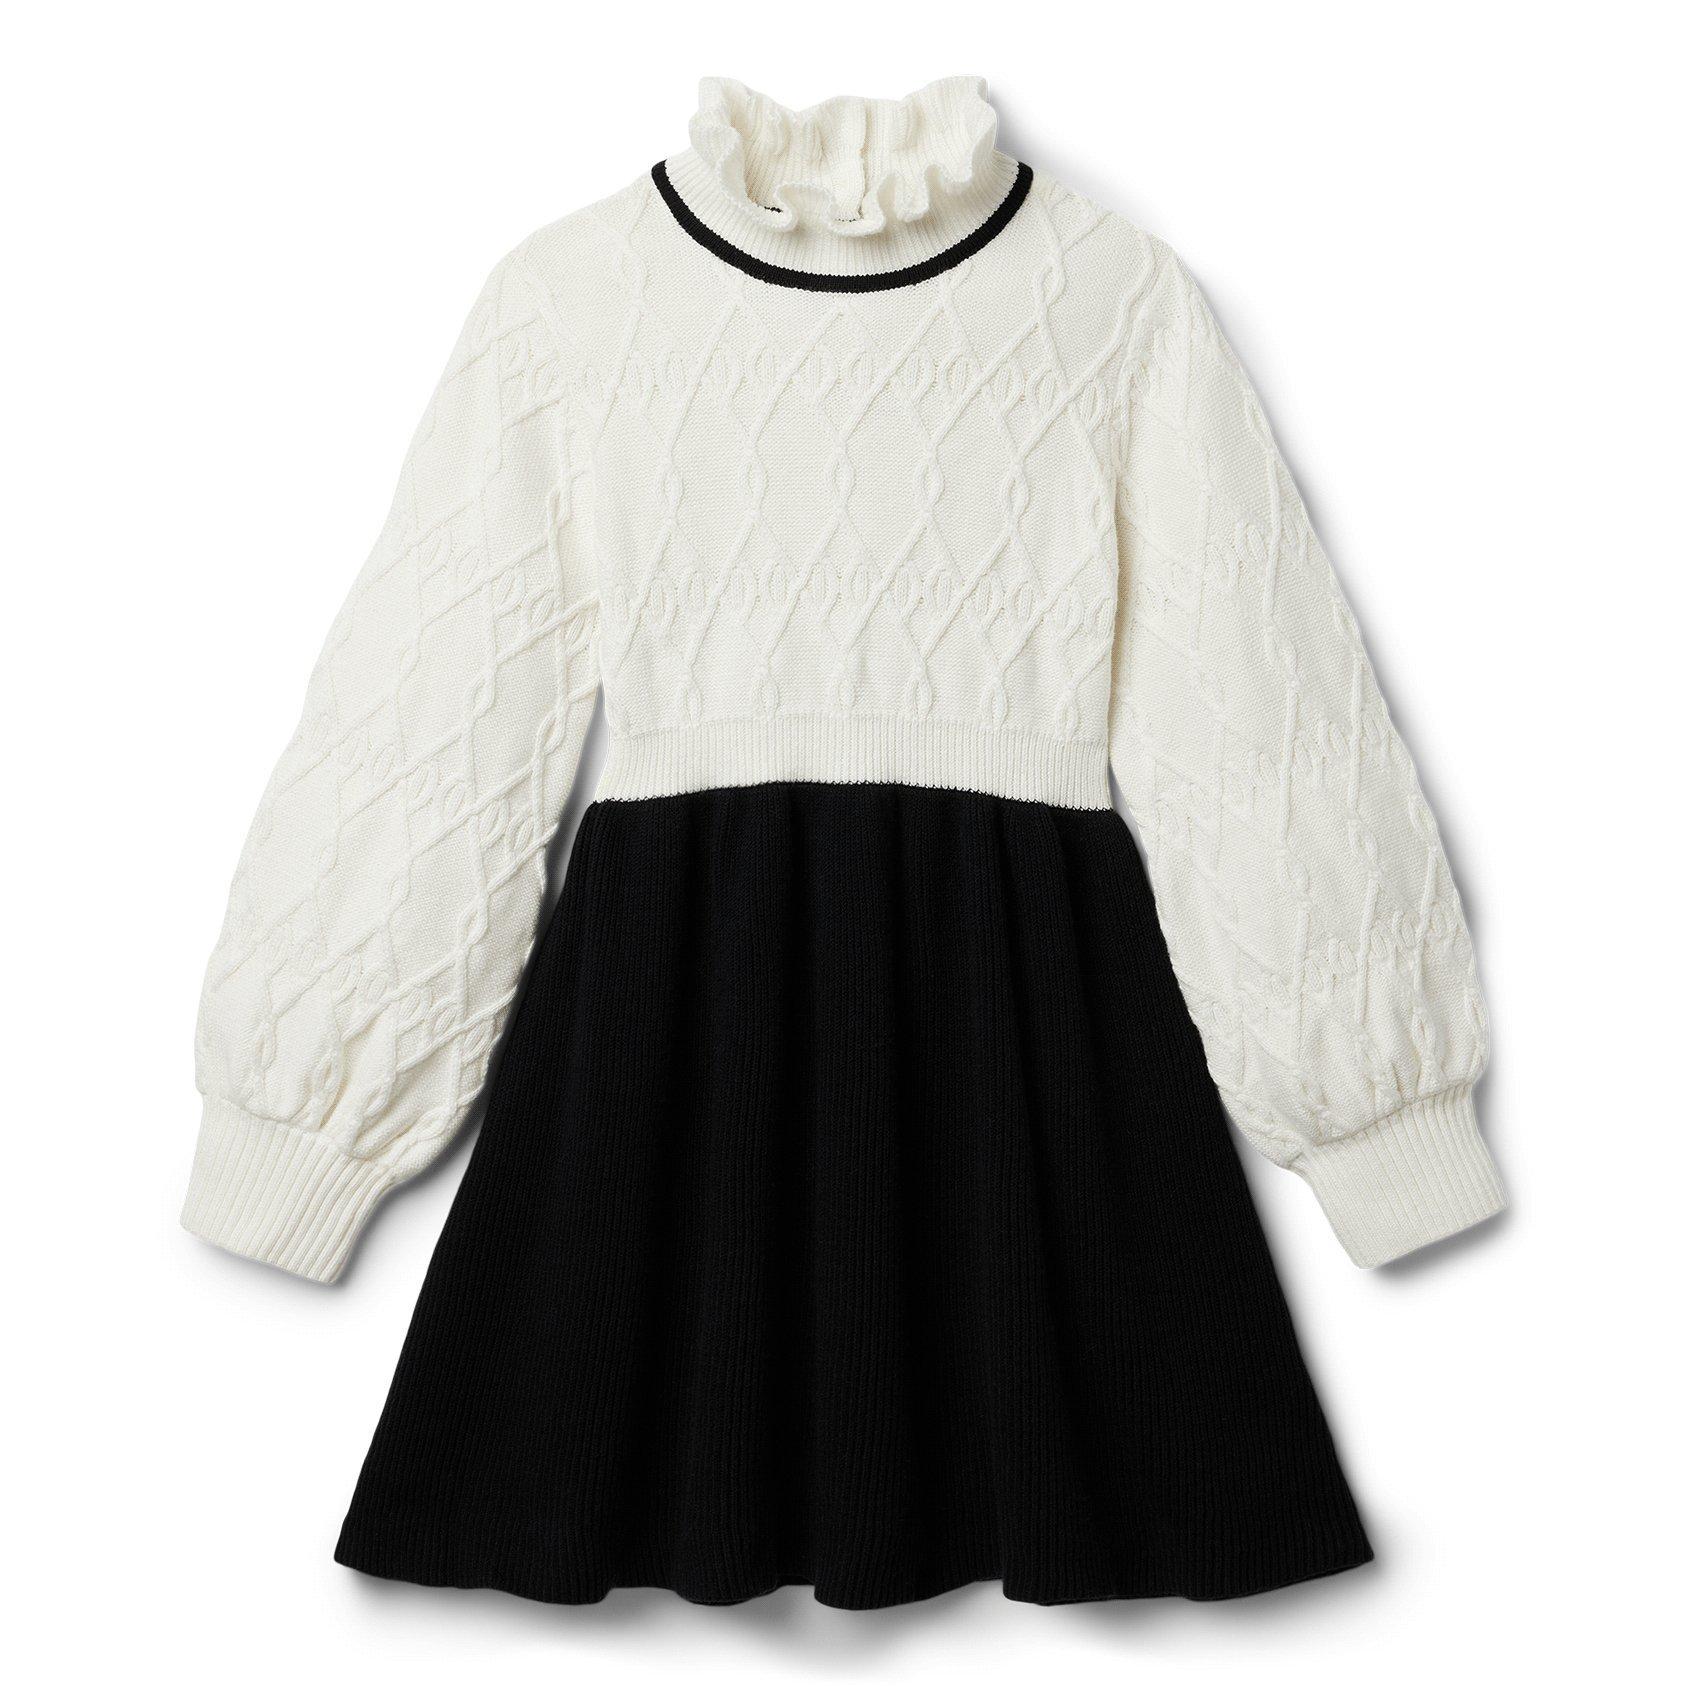 Contrast Textured Sweater Dress